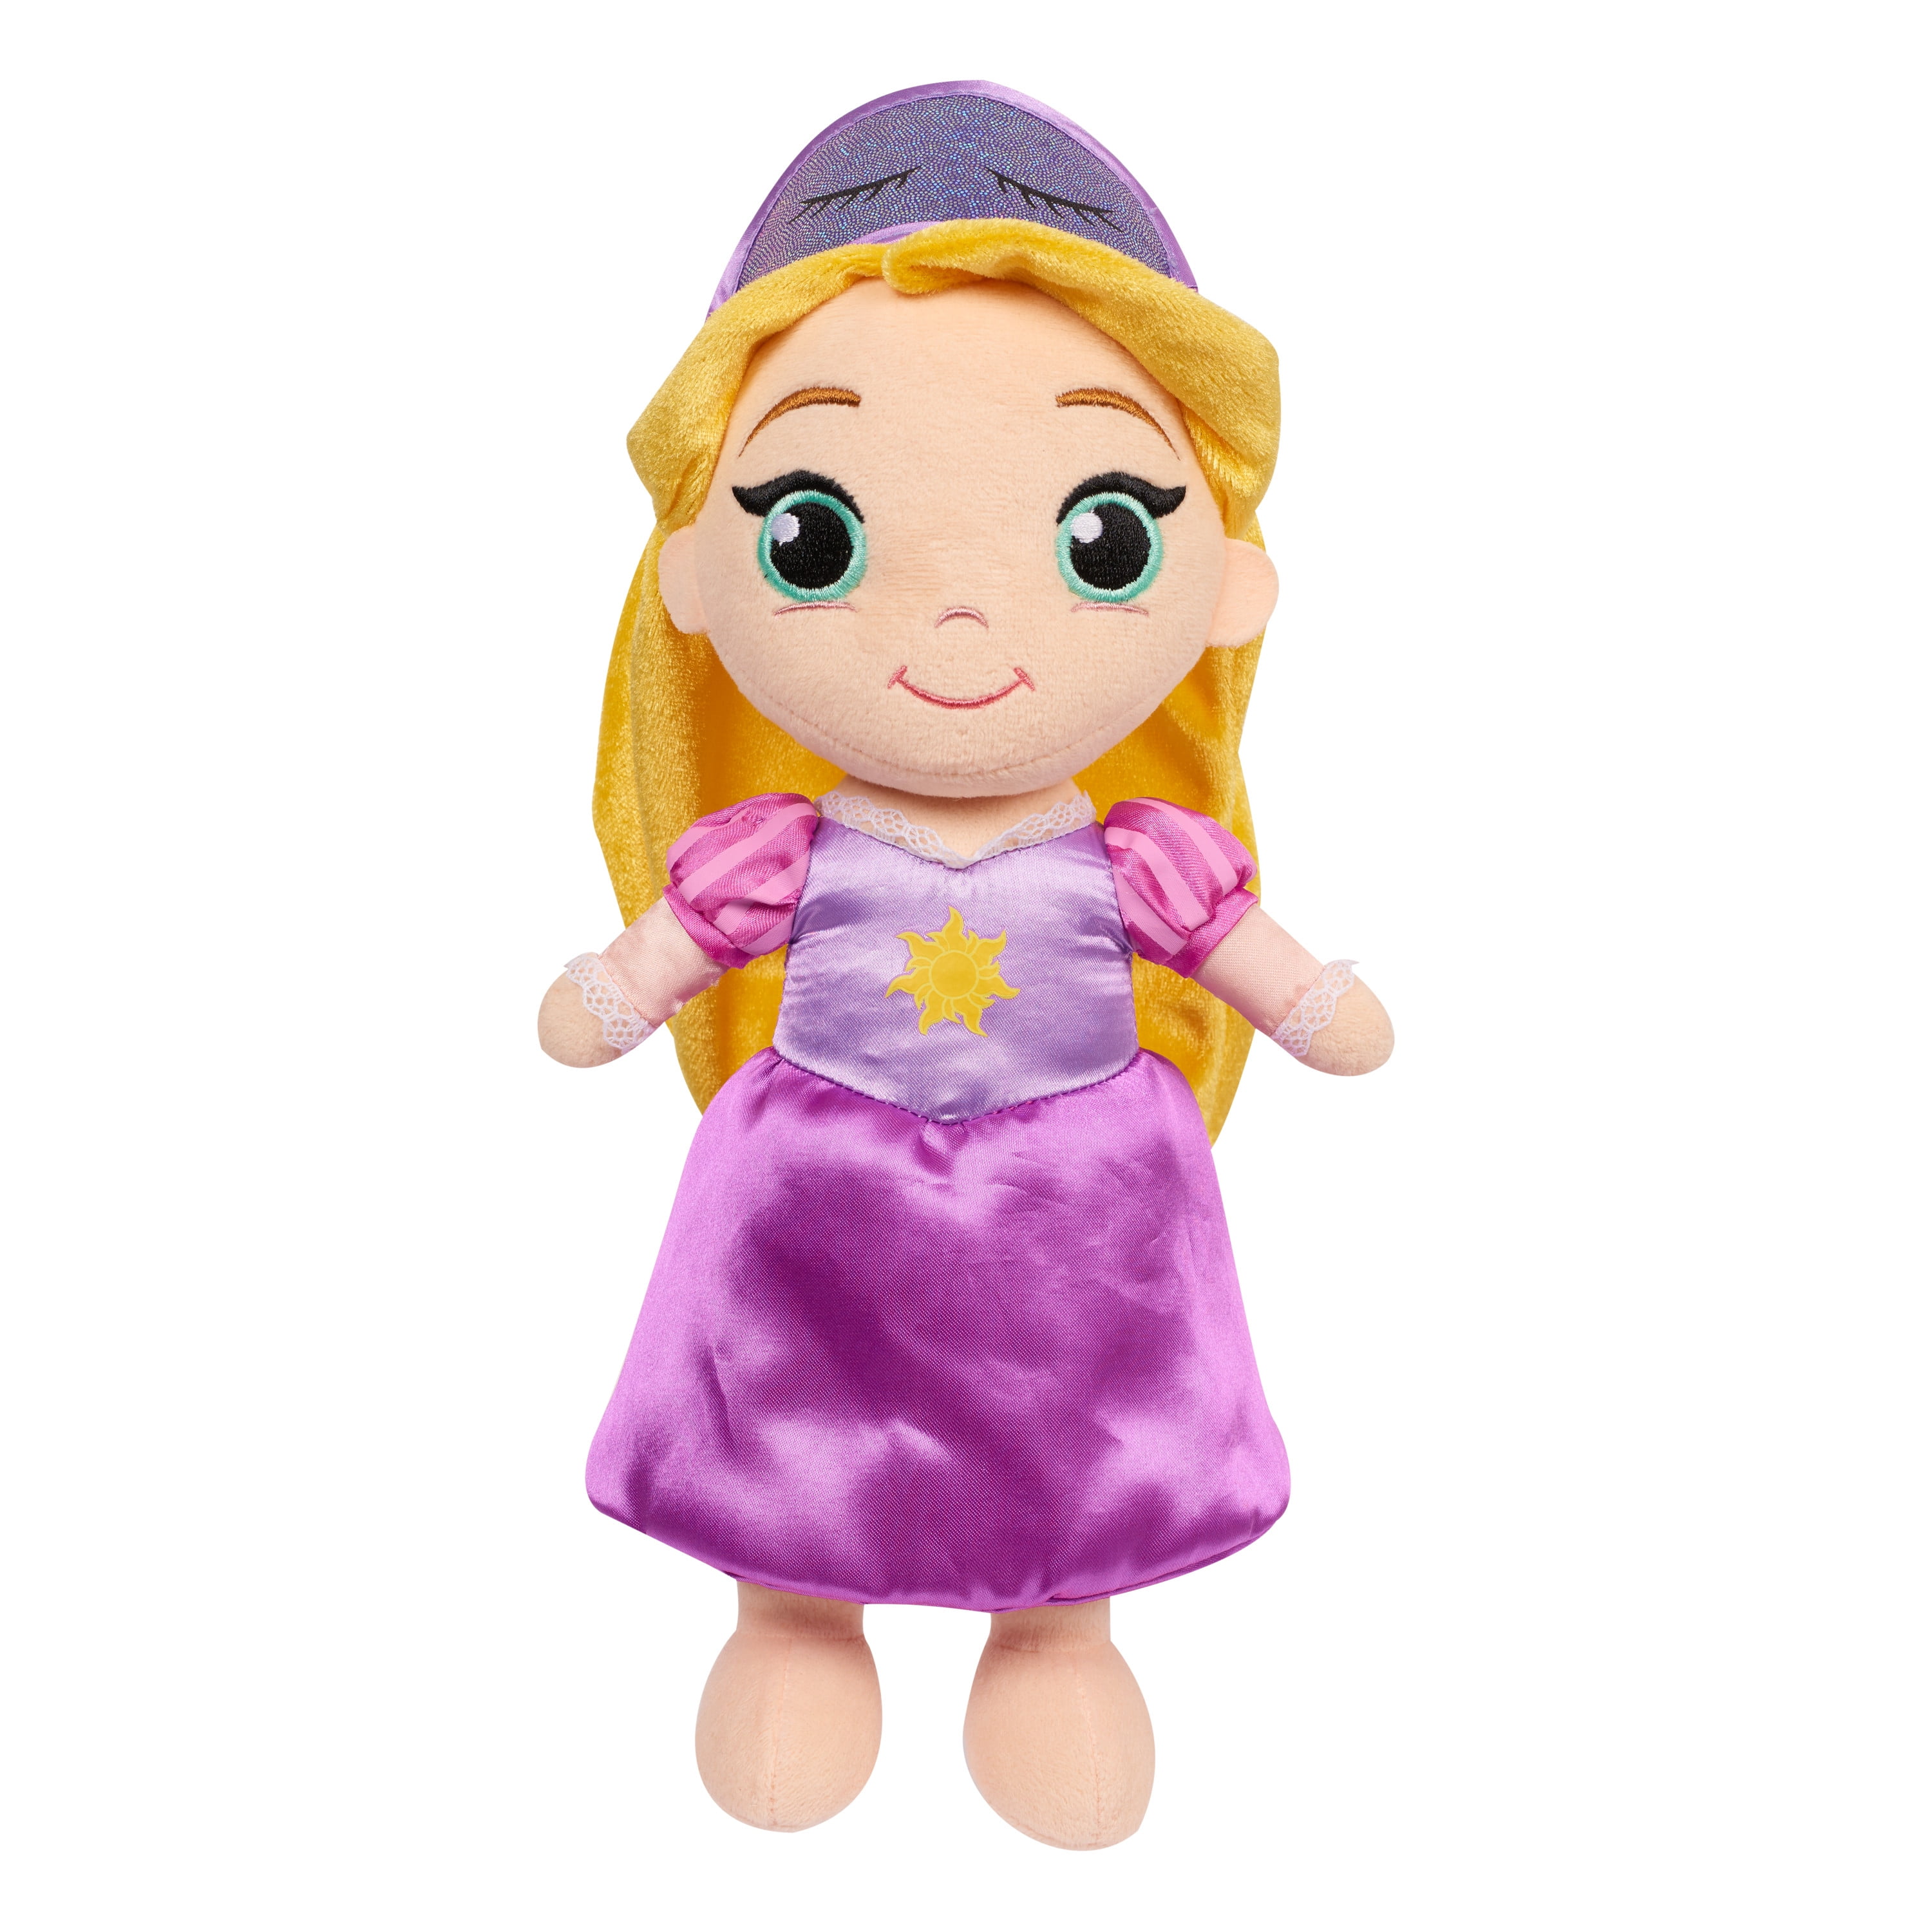 NEW Disney Magic Towel Princess Rapunzel Tangled purple with lanterns washcloth 